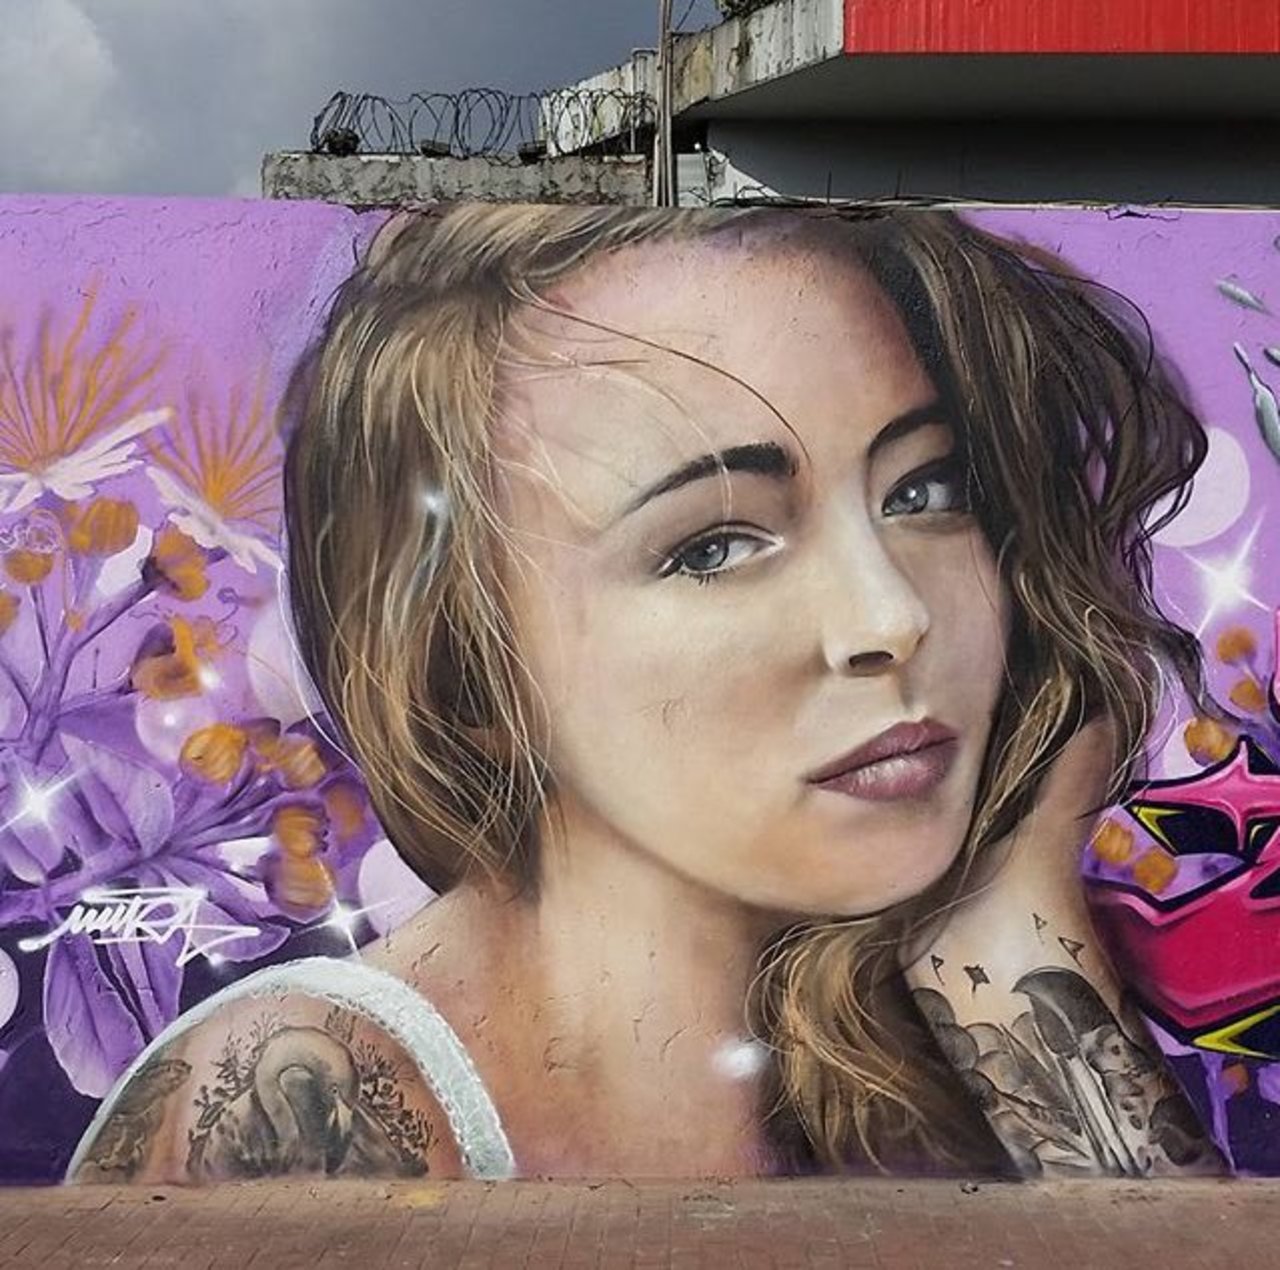 RT @artlife365: New Street Art by Mantarea 

#art #graffiti #mural #streetart https://t.co/N6g9tRylhY